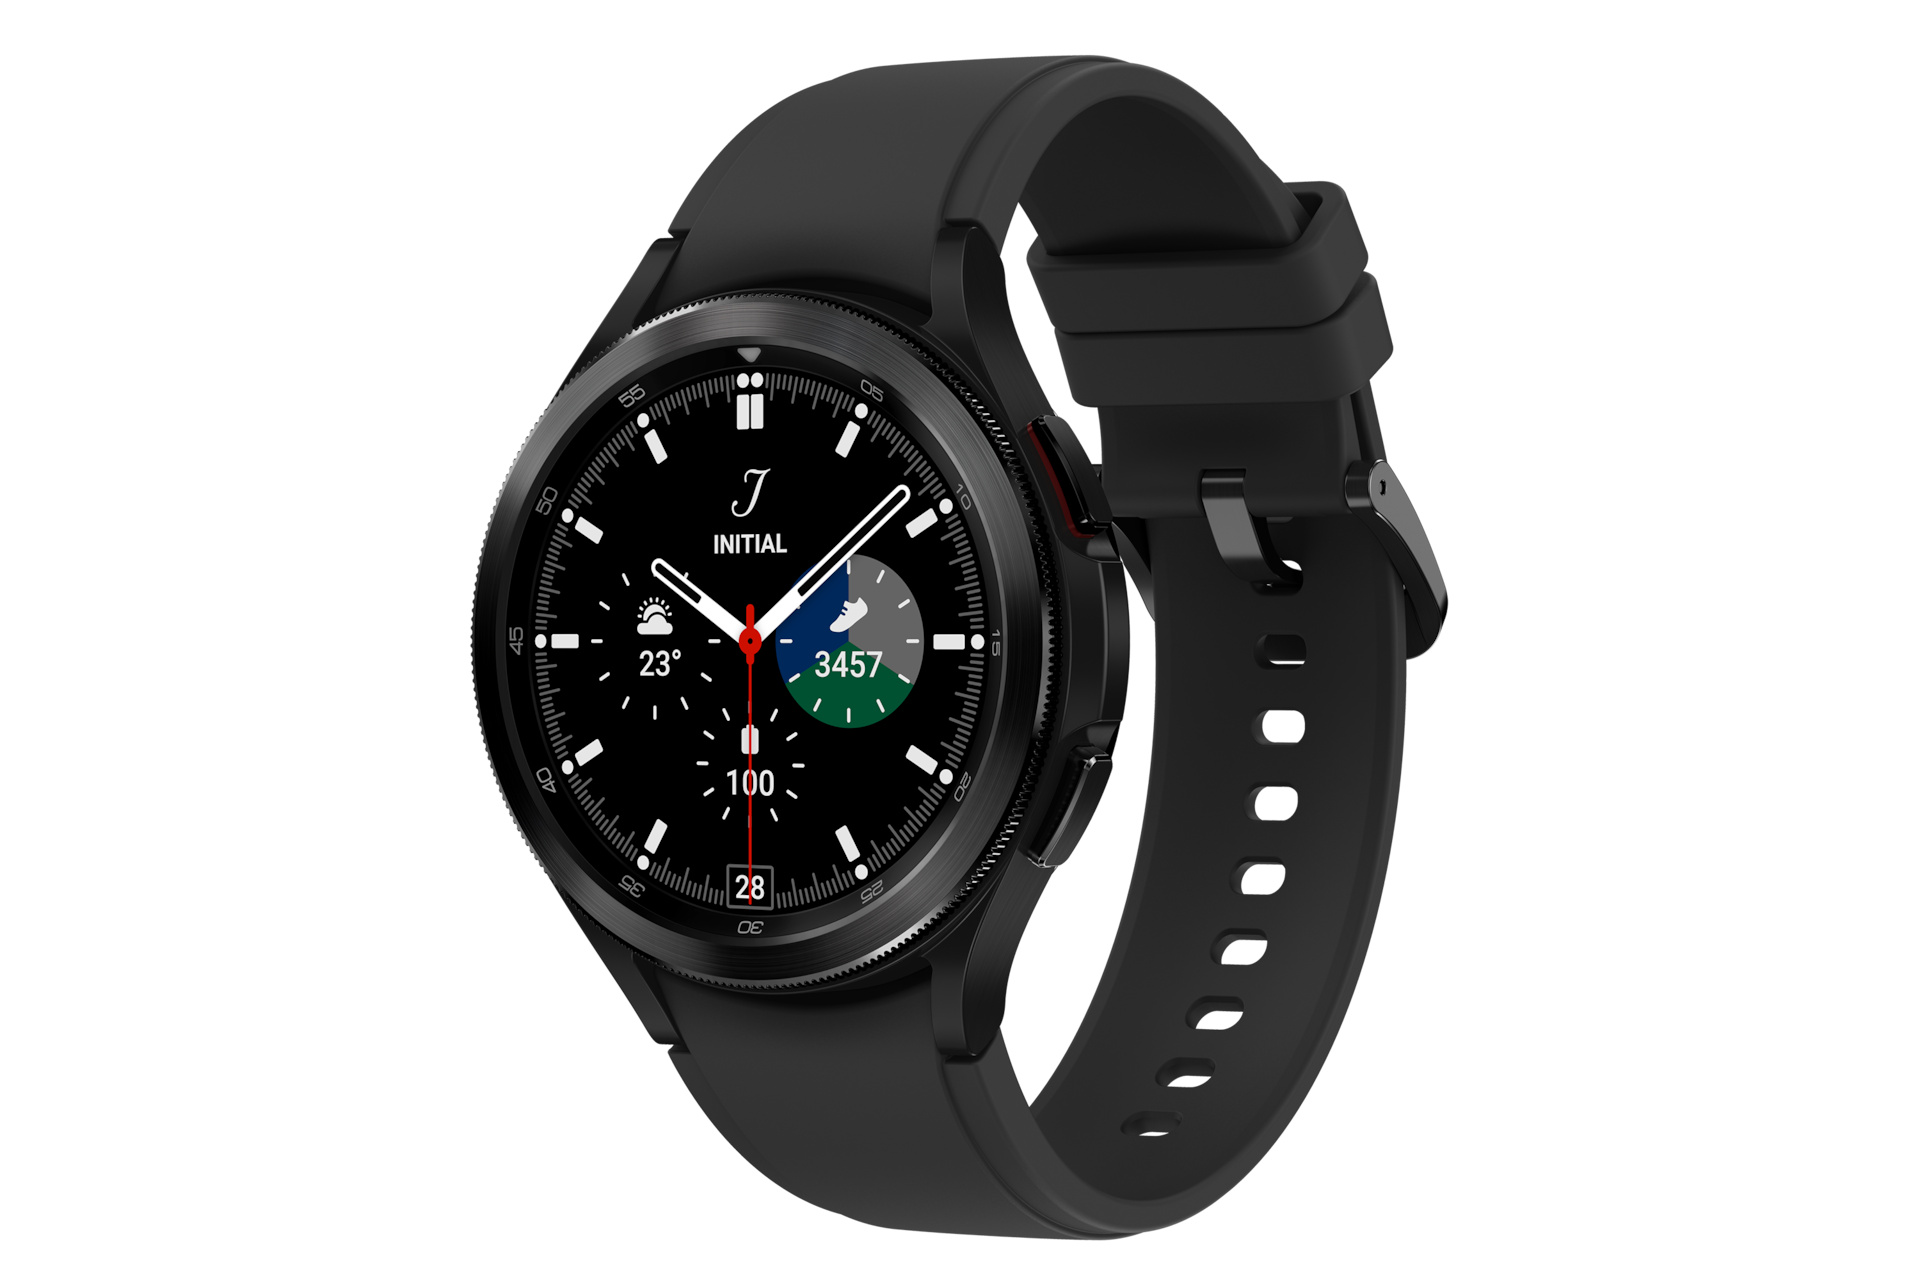 Tampilan depan Samsung Galaxy Watch 4 smartwatch warna Hitam. Cek Harga dan spesifikasi